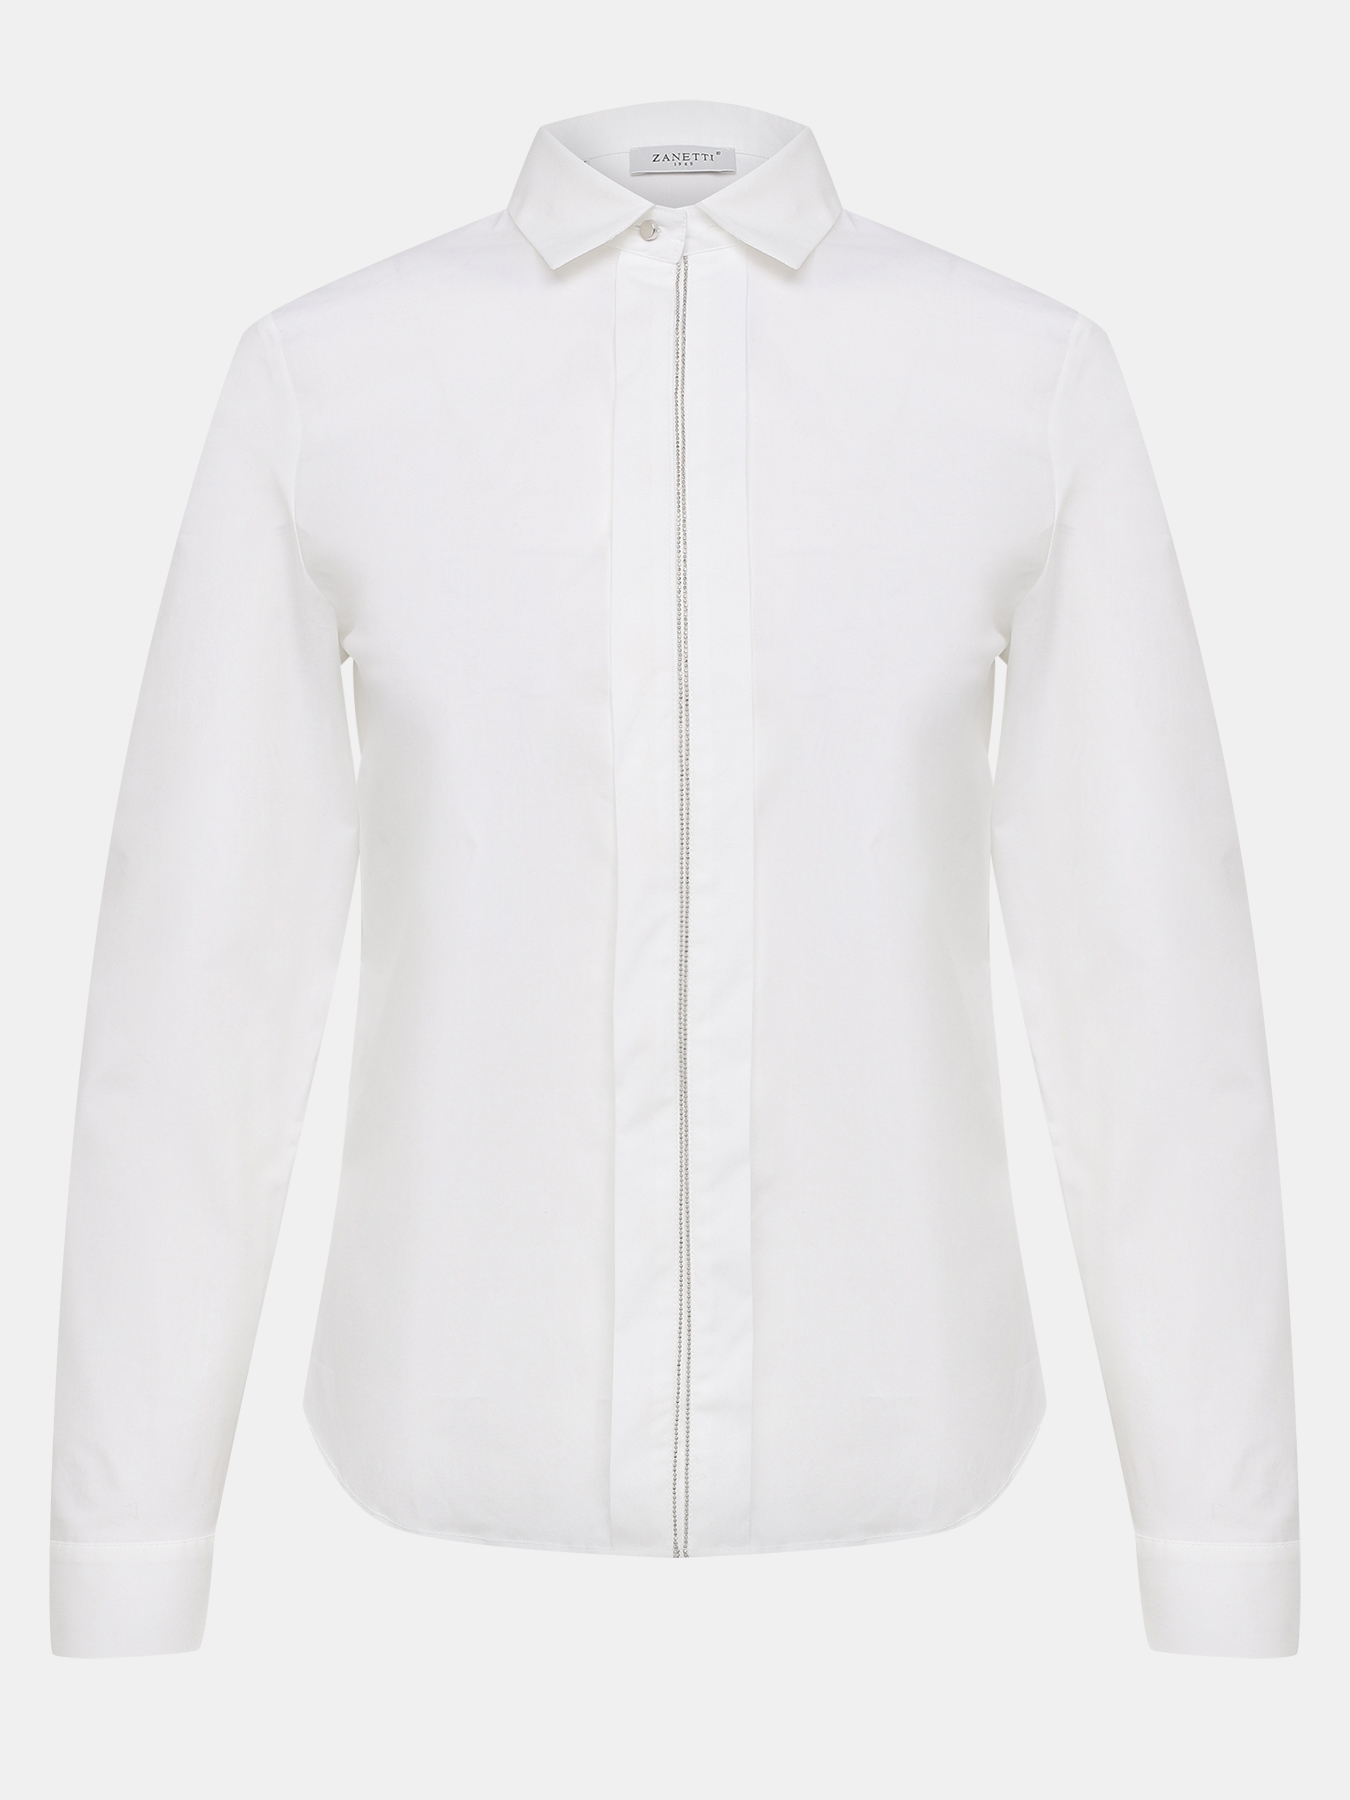 Блузка Zanetti 426611-021, цвет белый, размер 42 - фото 1